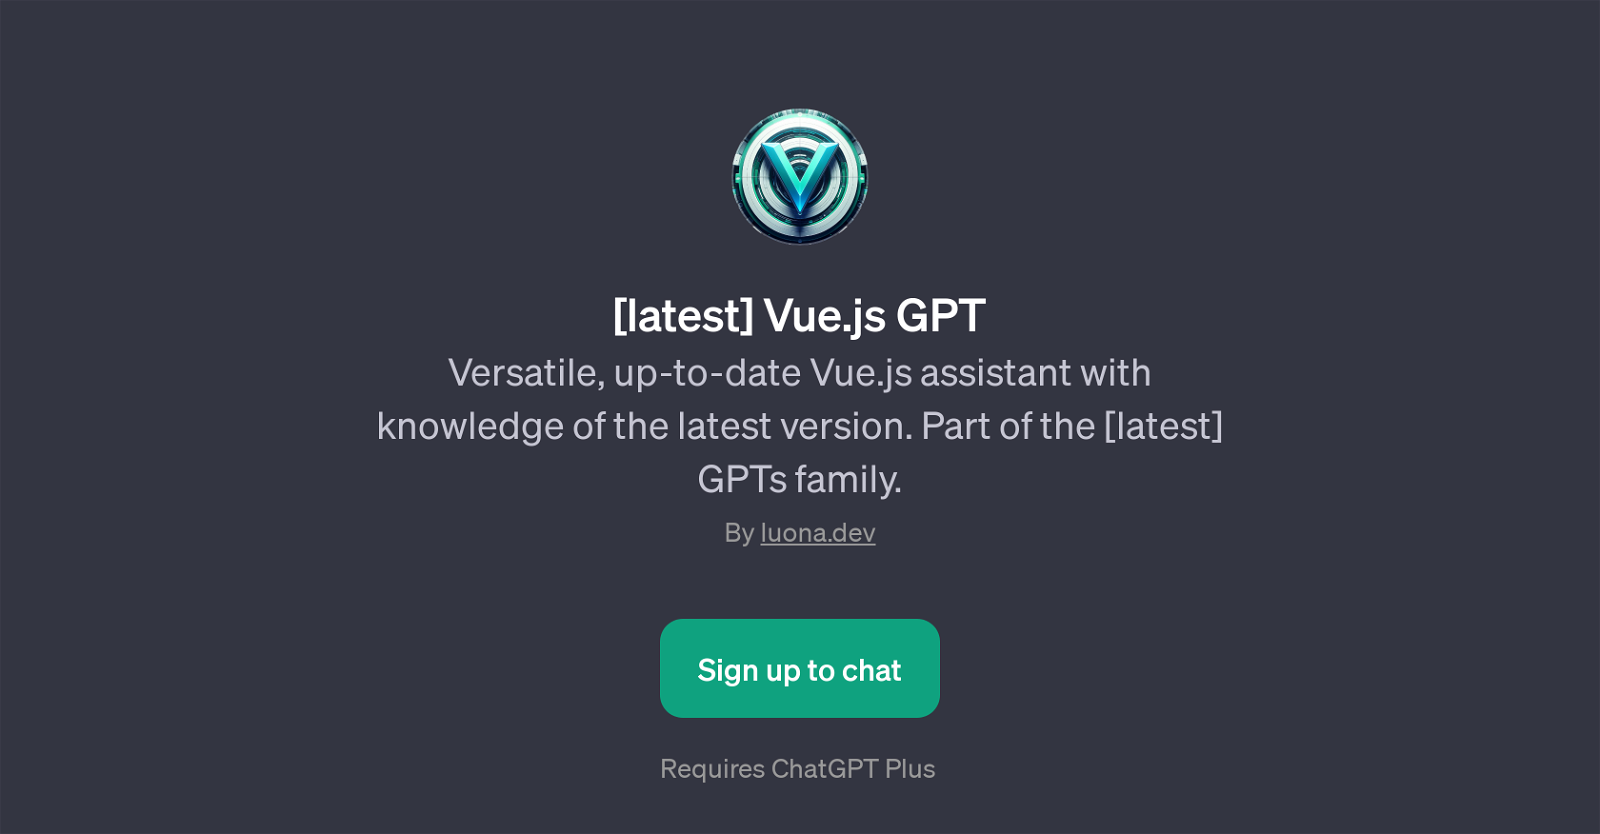 [latest] Vue.js GPT website